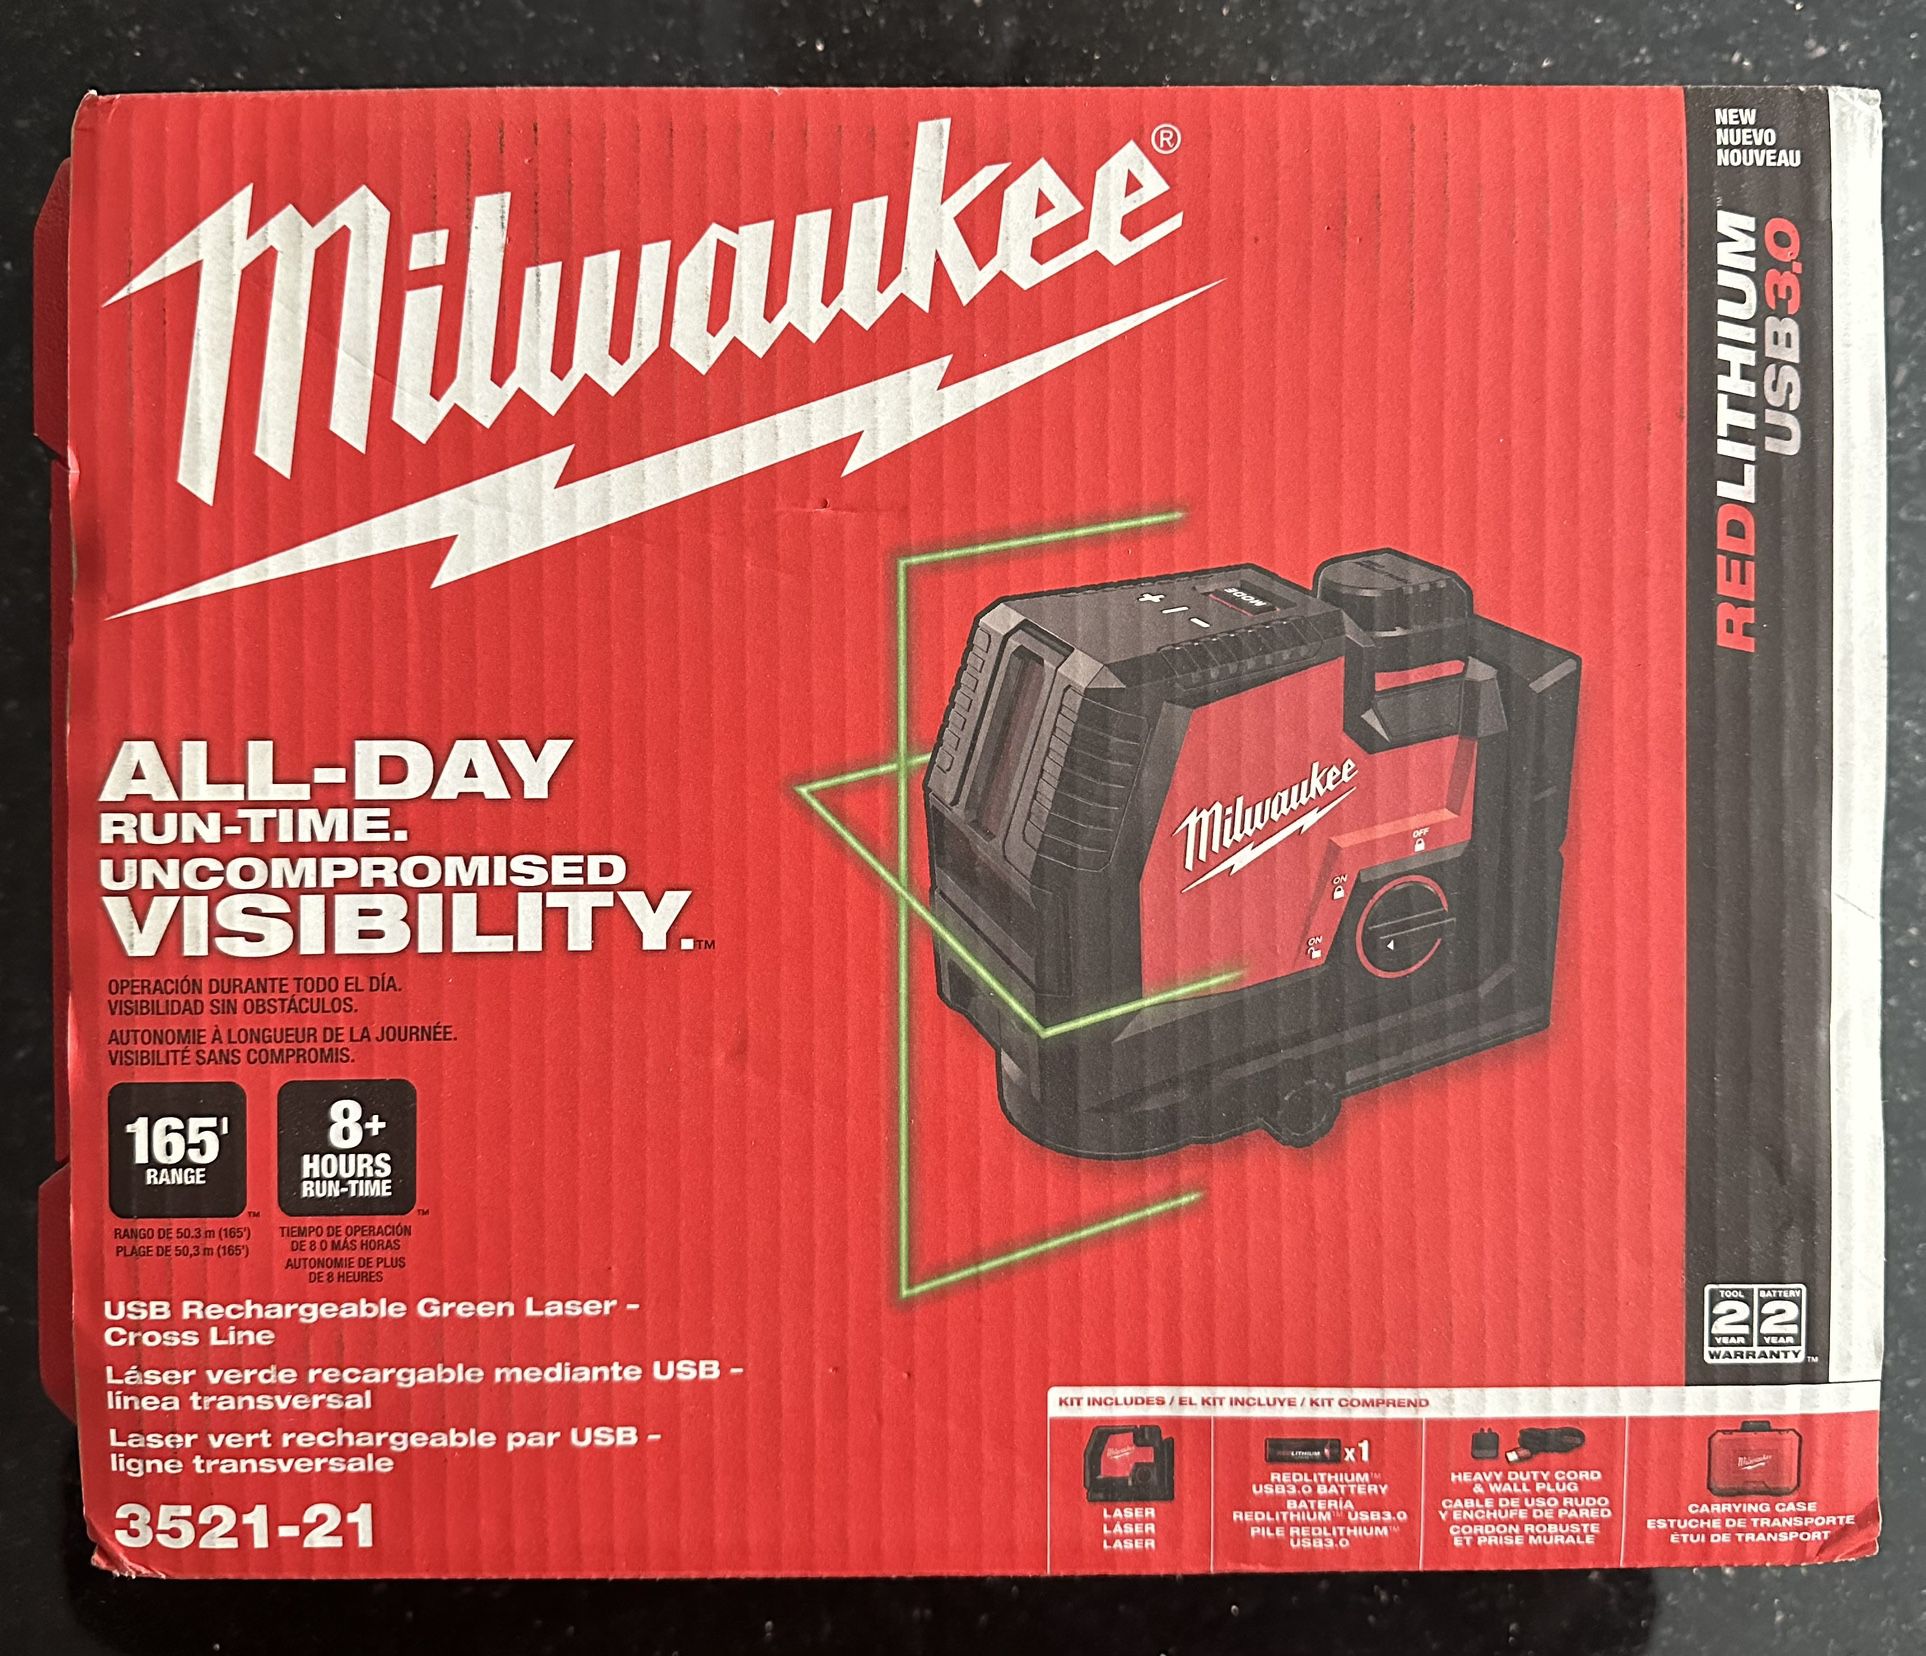 New Milwaukee Laser Level